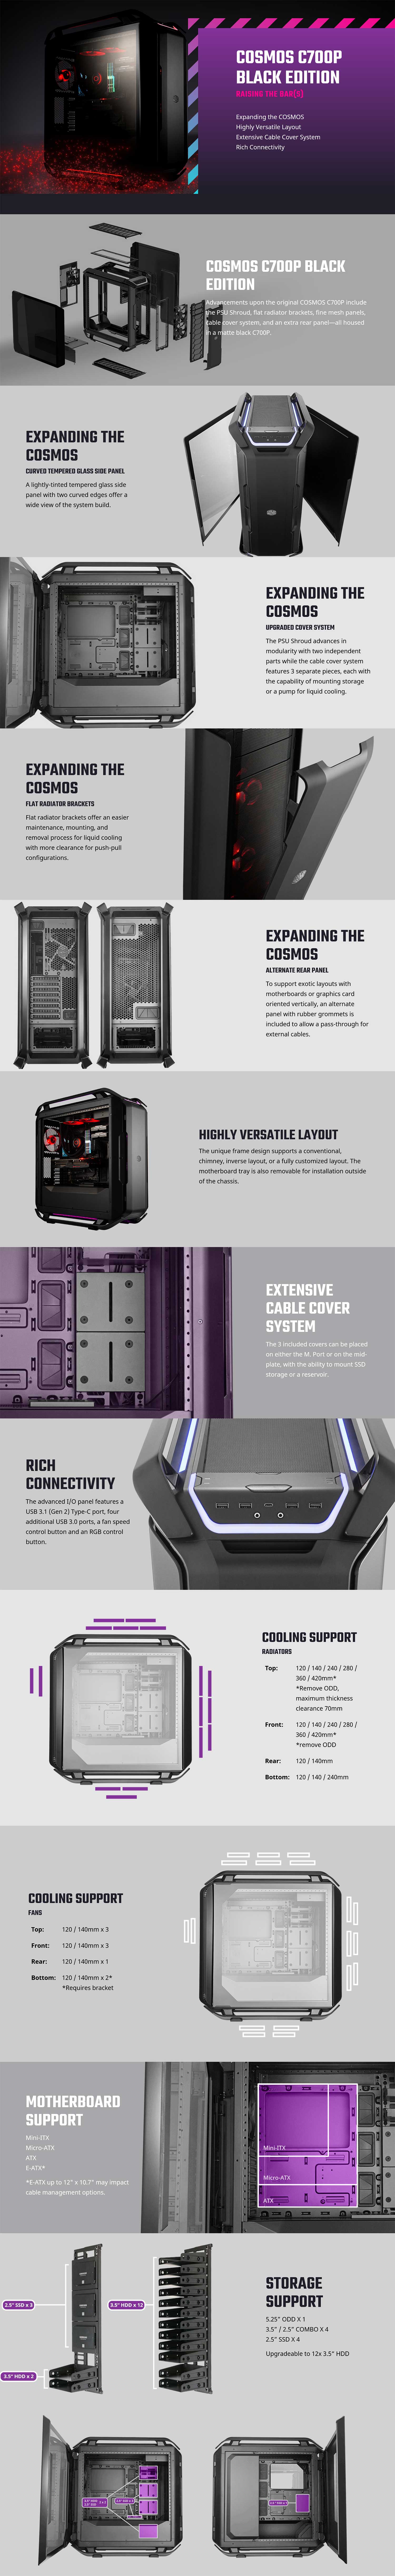 Cooler Master C700p RGB full tower PC case black edition [MCC-C700P-KG5N-S00] Details